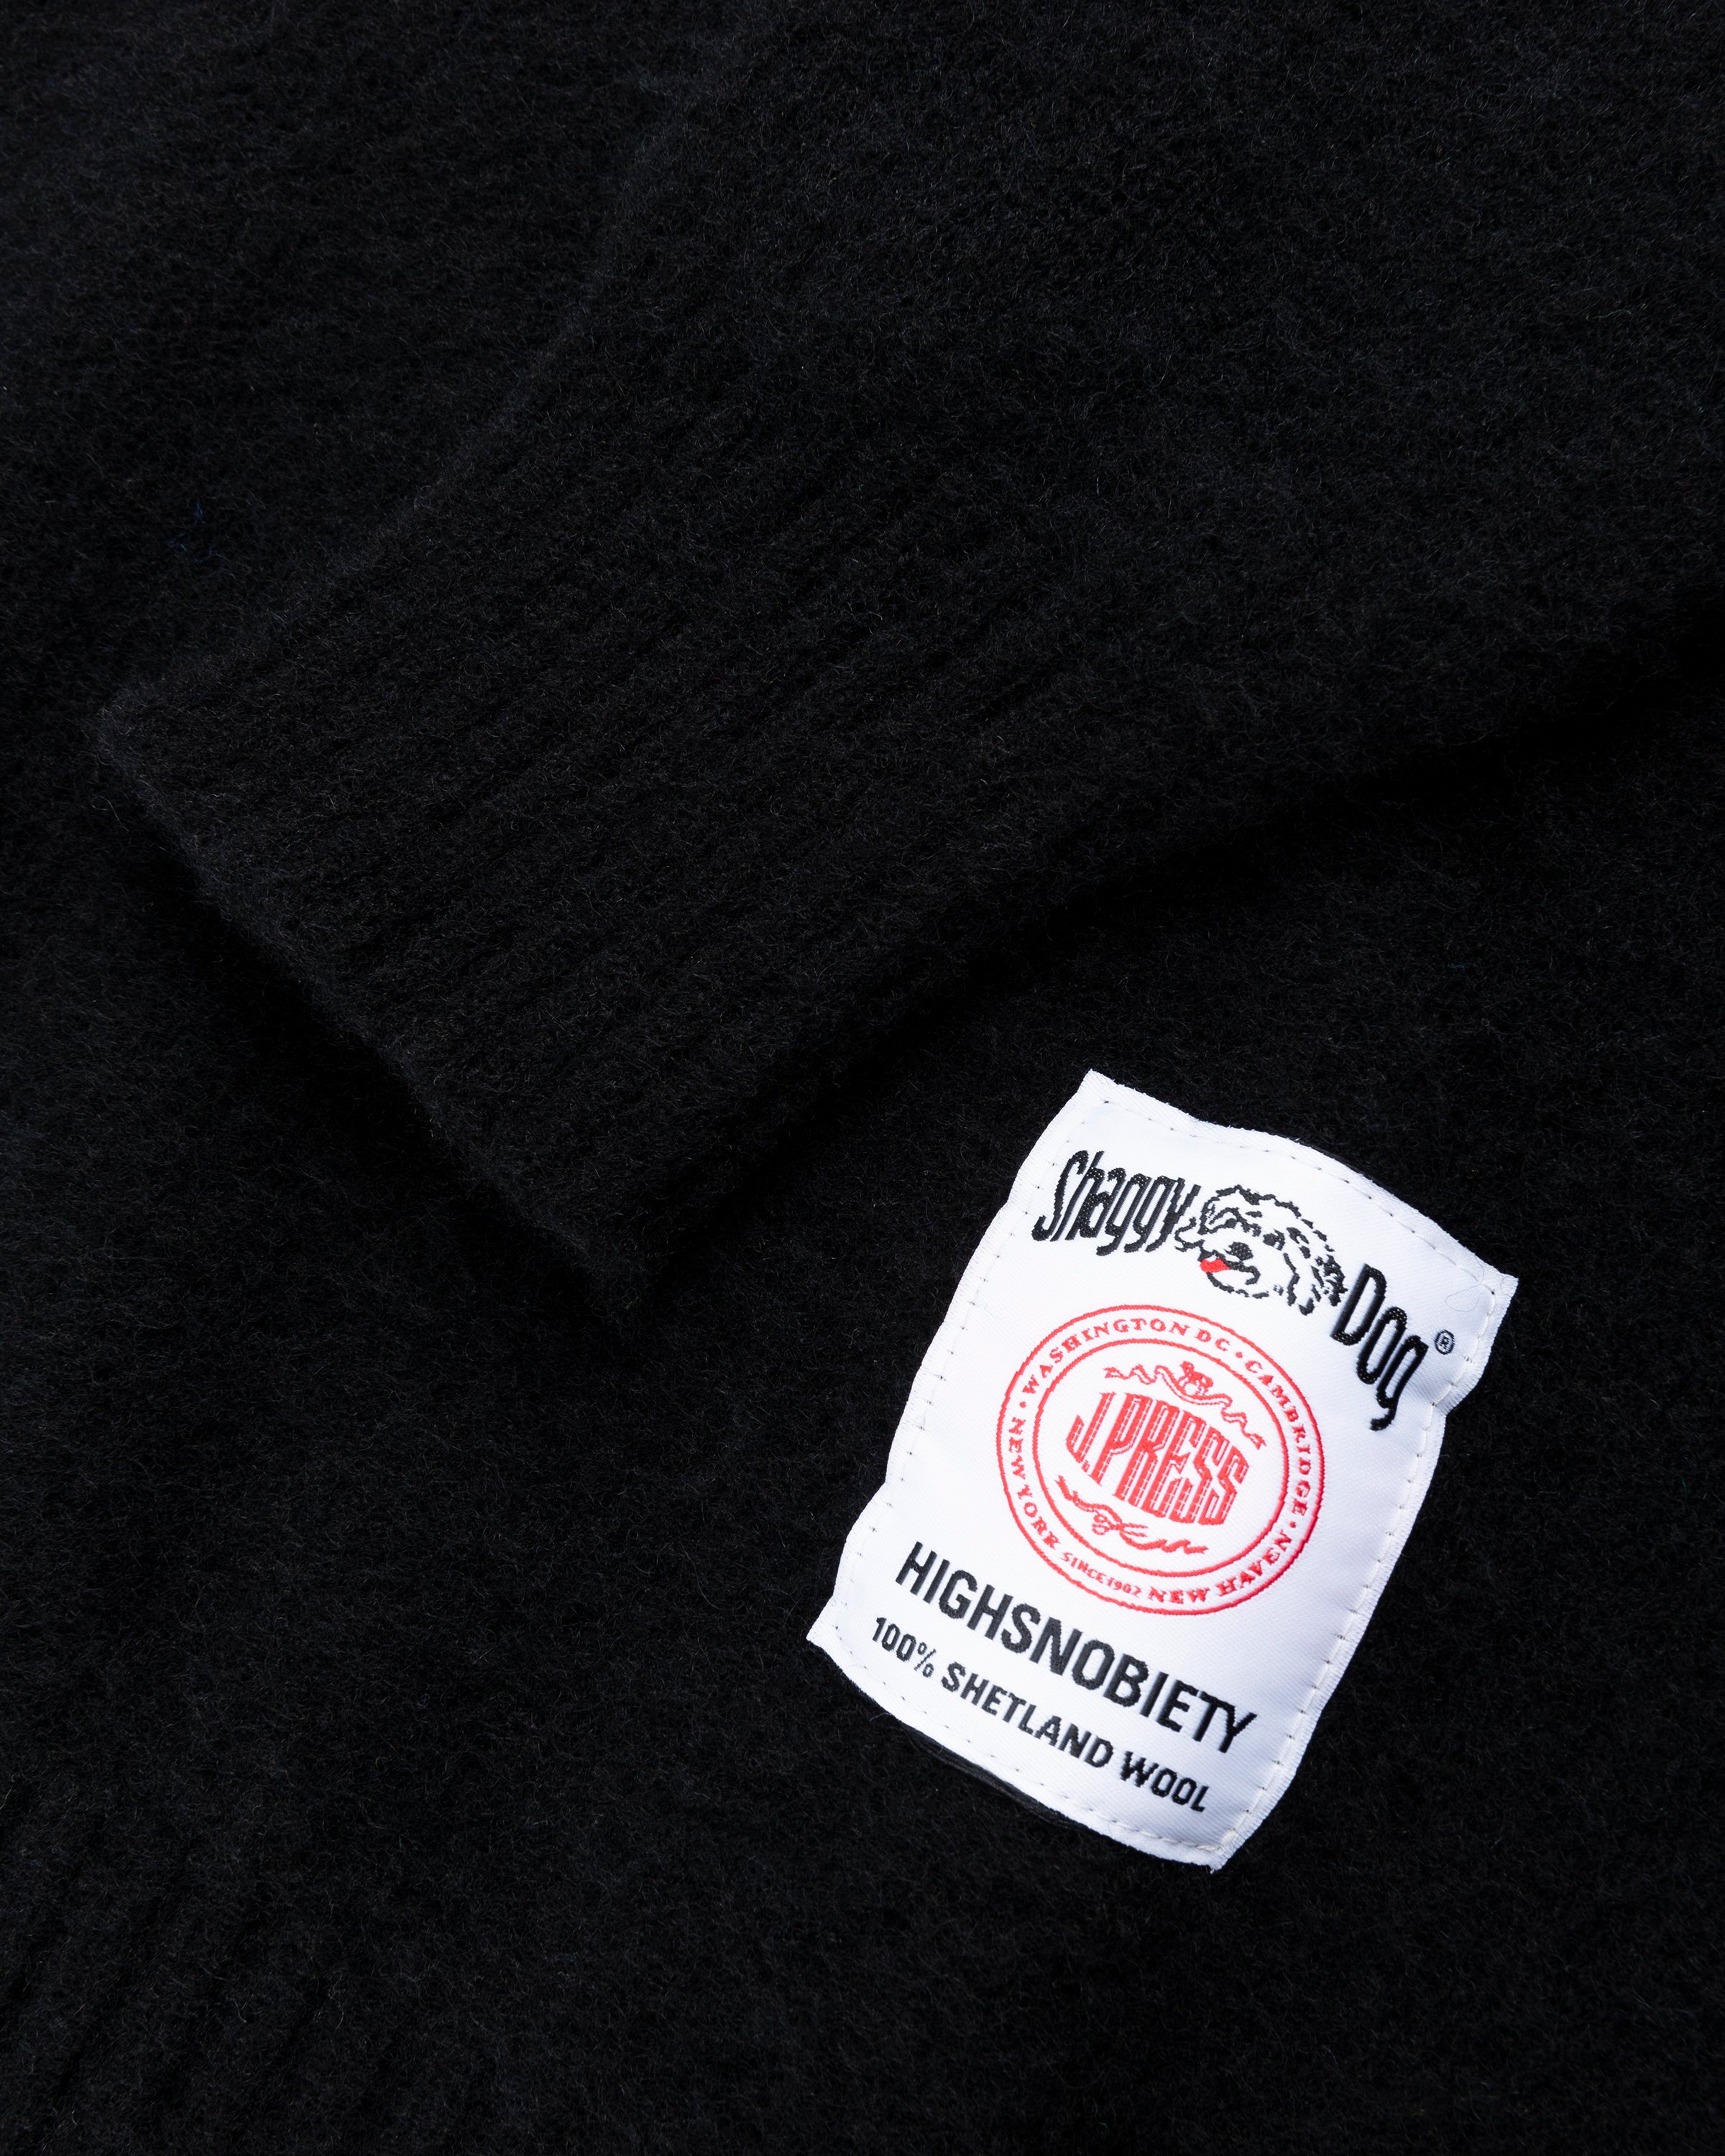 J. Press x Highsnobiety - Shaggy Dog Solid Sweater Black - Clothing - Black - Image 5